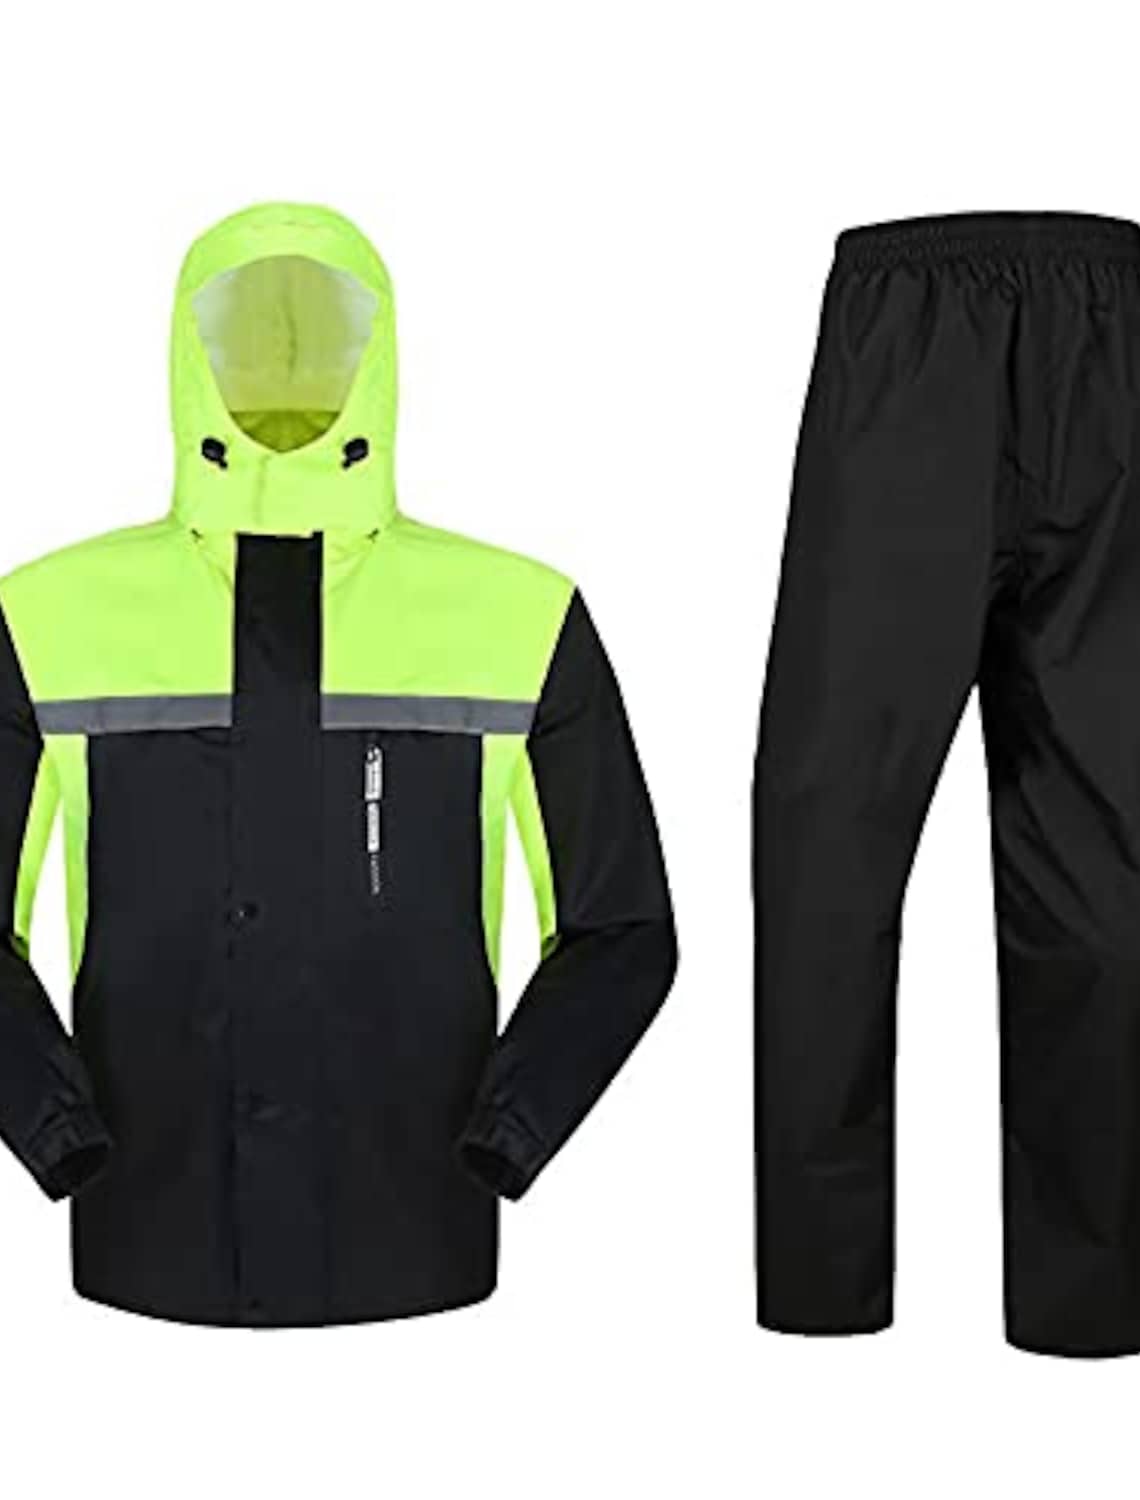 unisex rainsuit waterproof jacket and trousers set hooded fishing